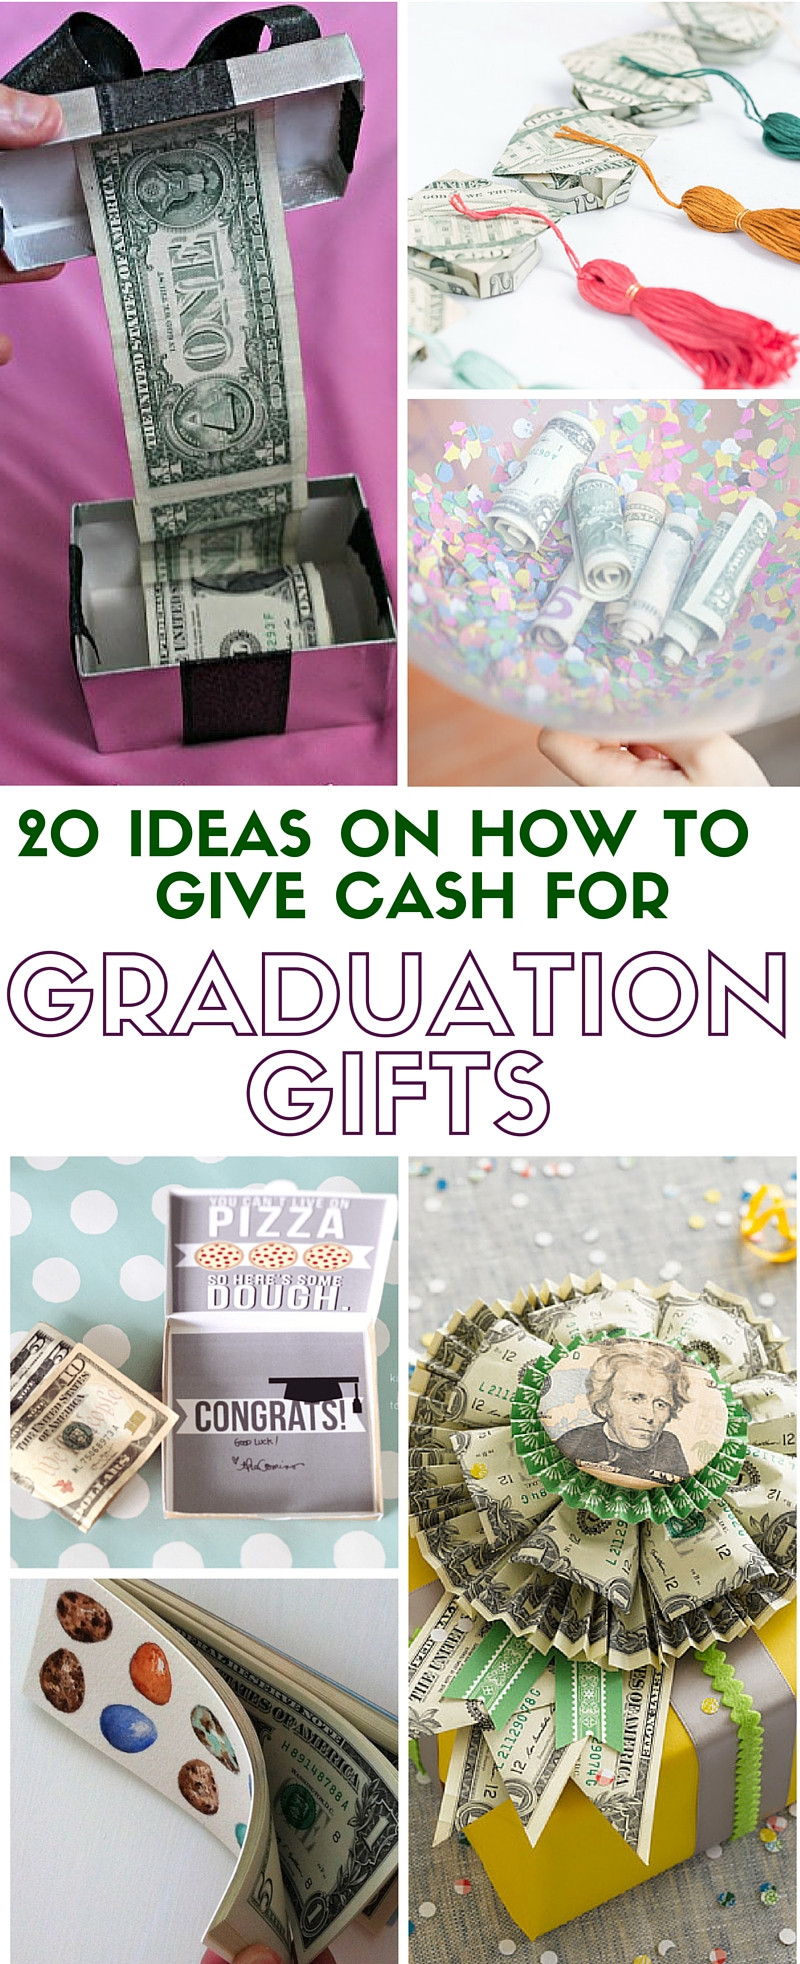 Men'S Graduation Gift Ideas
 31 Back To School Teacher Gift Ideas The Crafty Blog Stalker